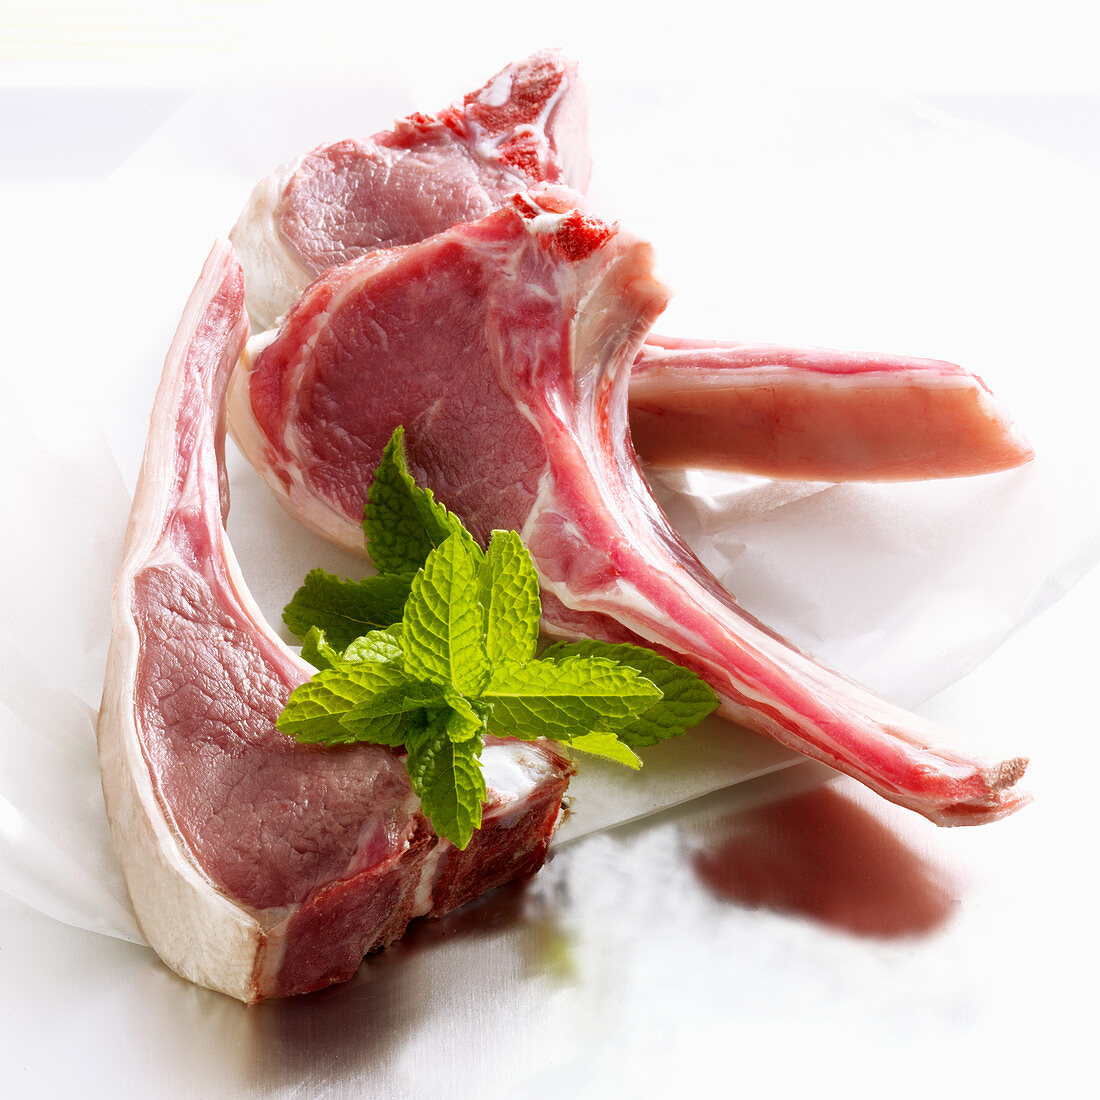 Raw lamb chops with fresh mint